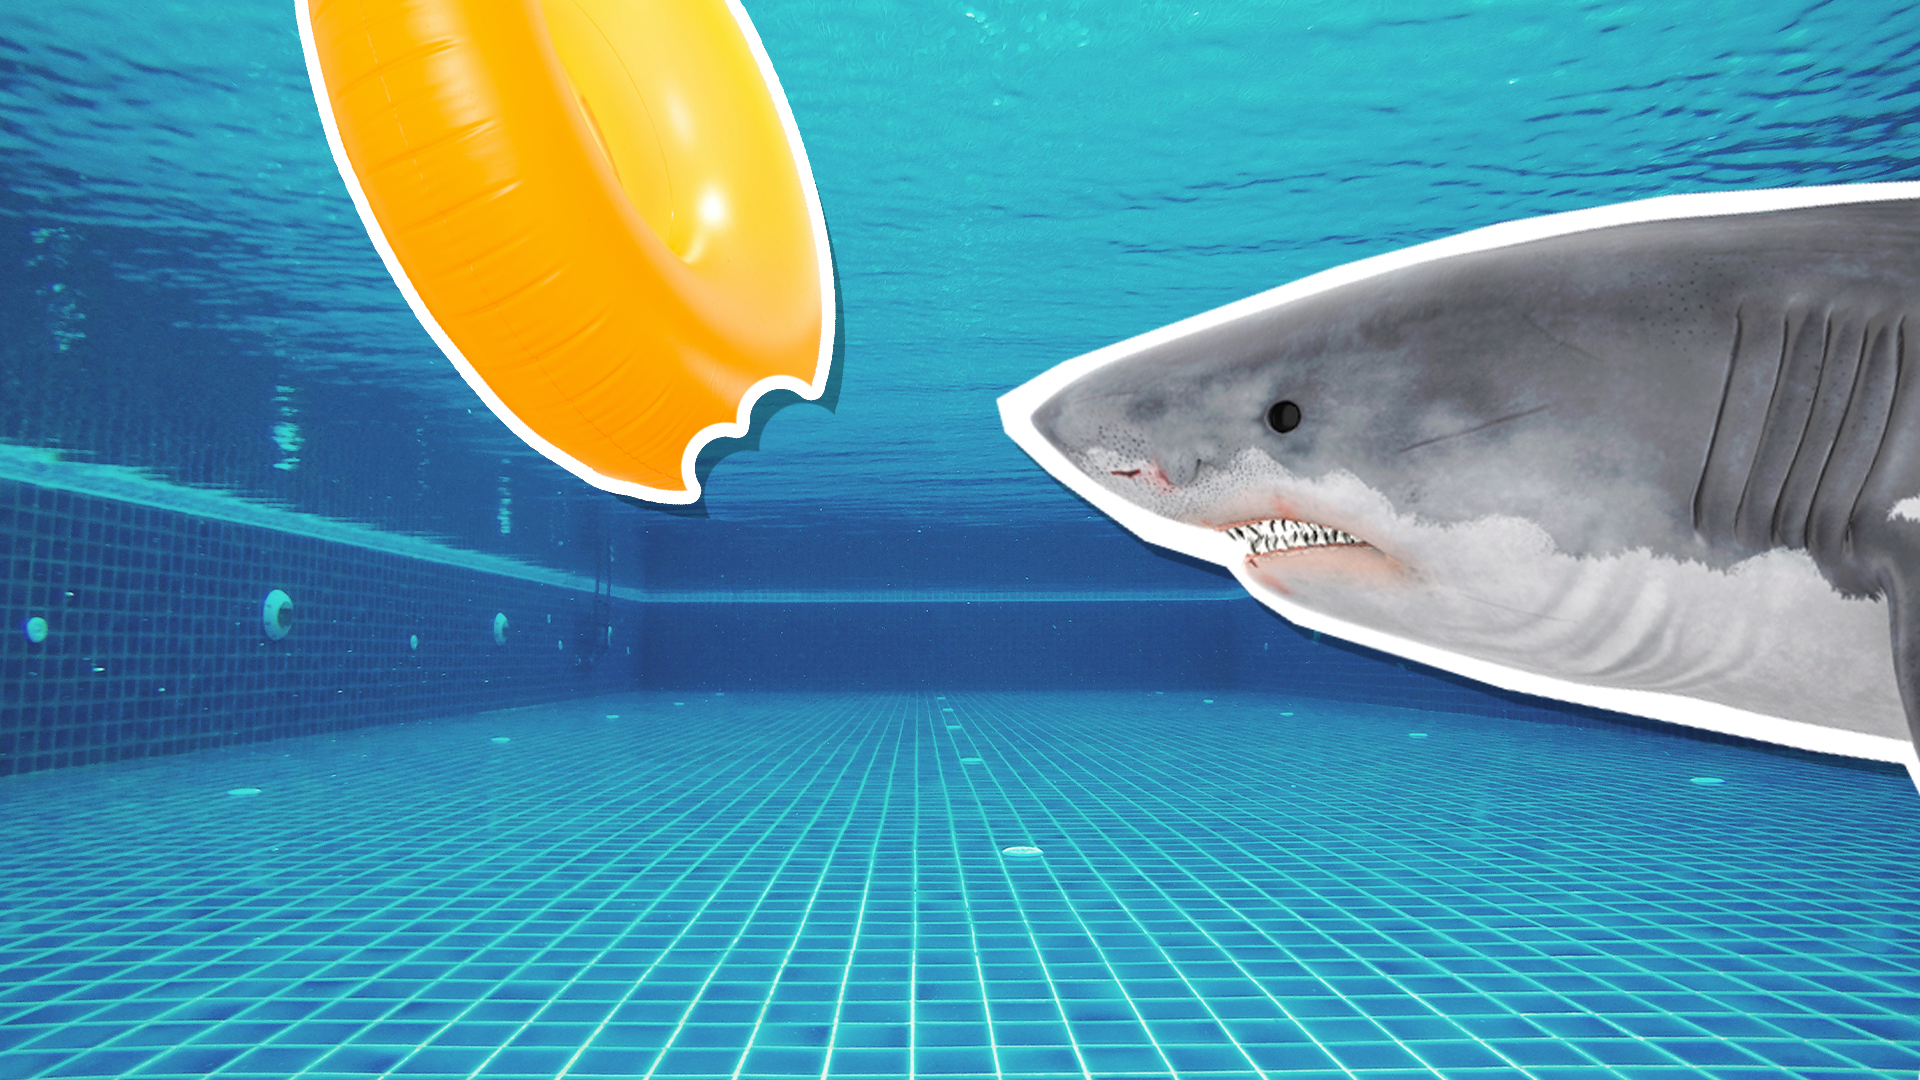 A shark biting a pool float